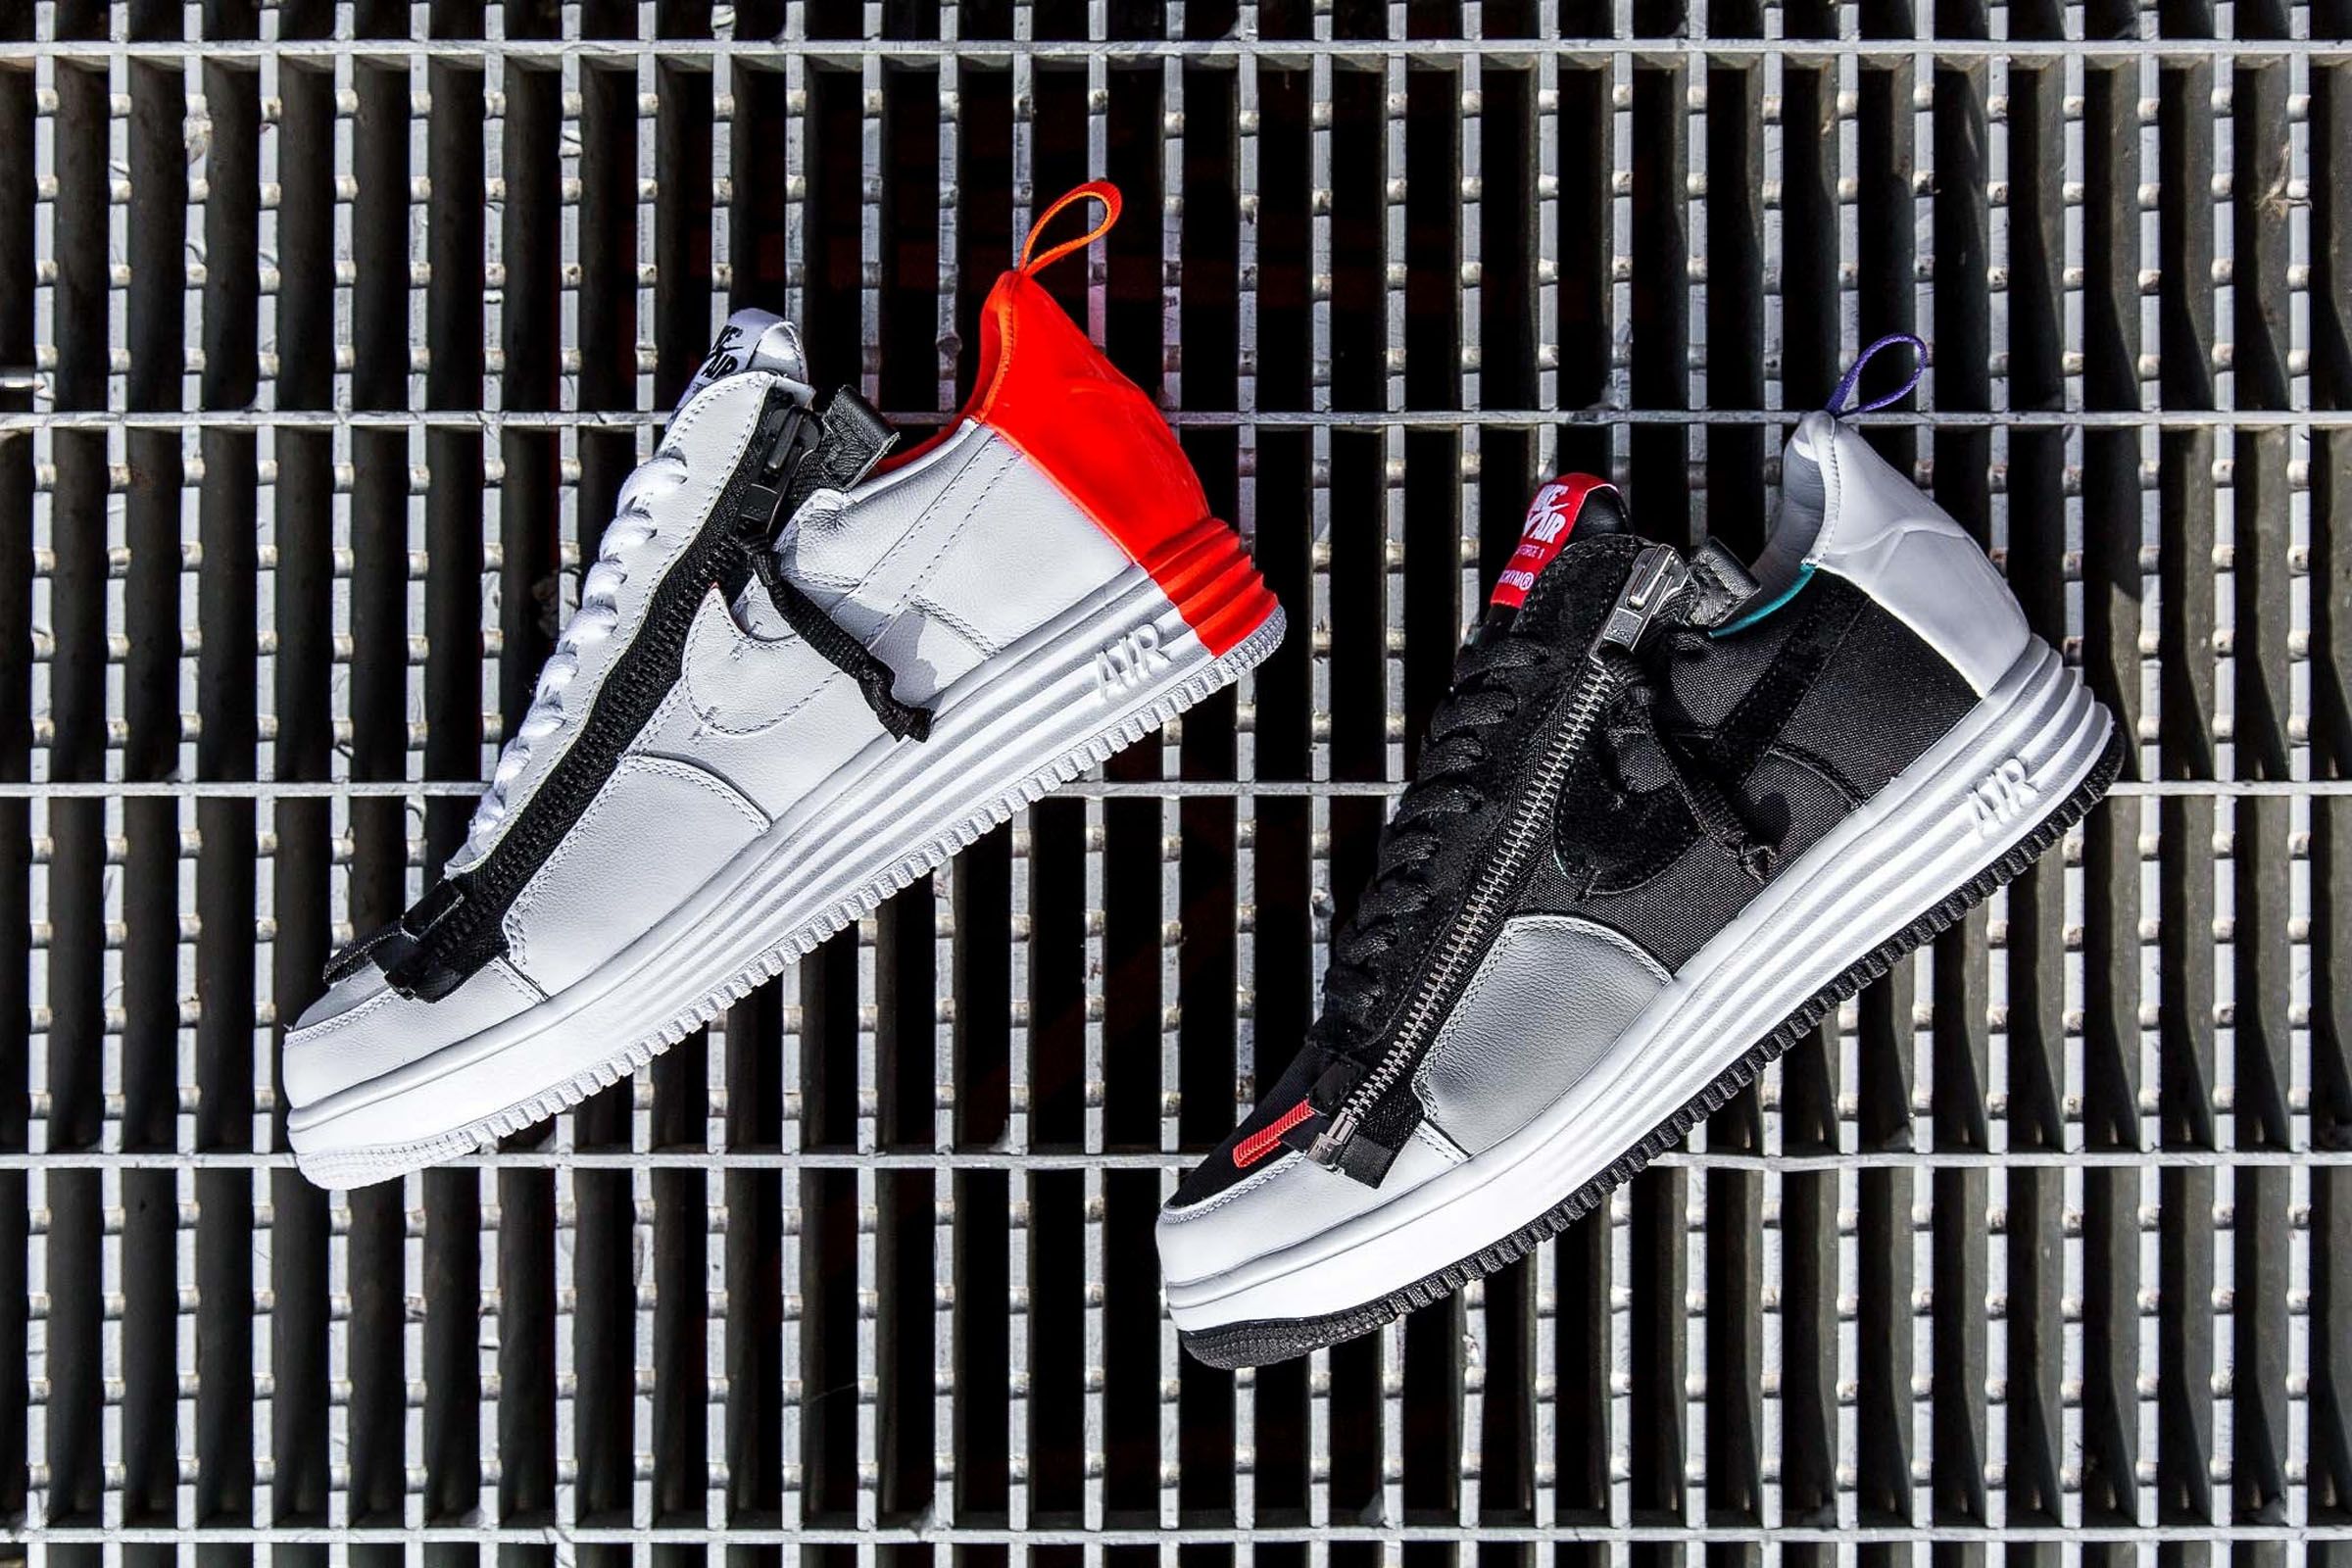 A Sample Pair of Louis Vuitton x Nike Blazer Has Surfaced